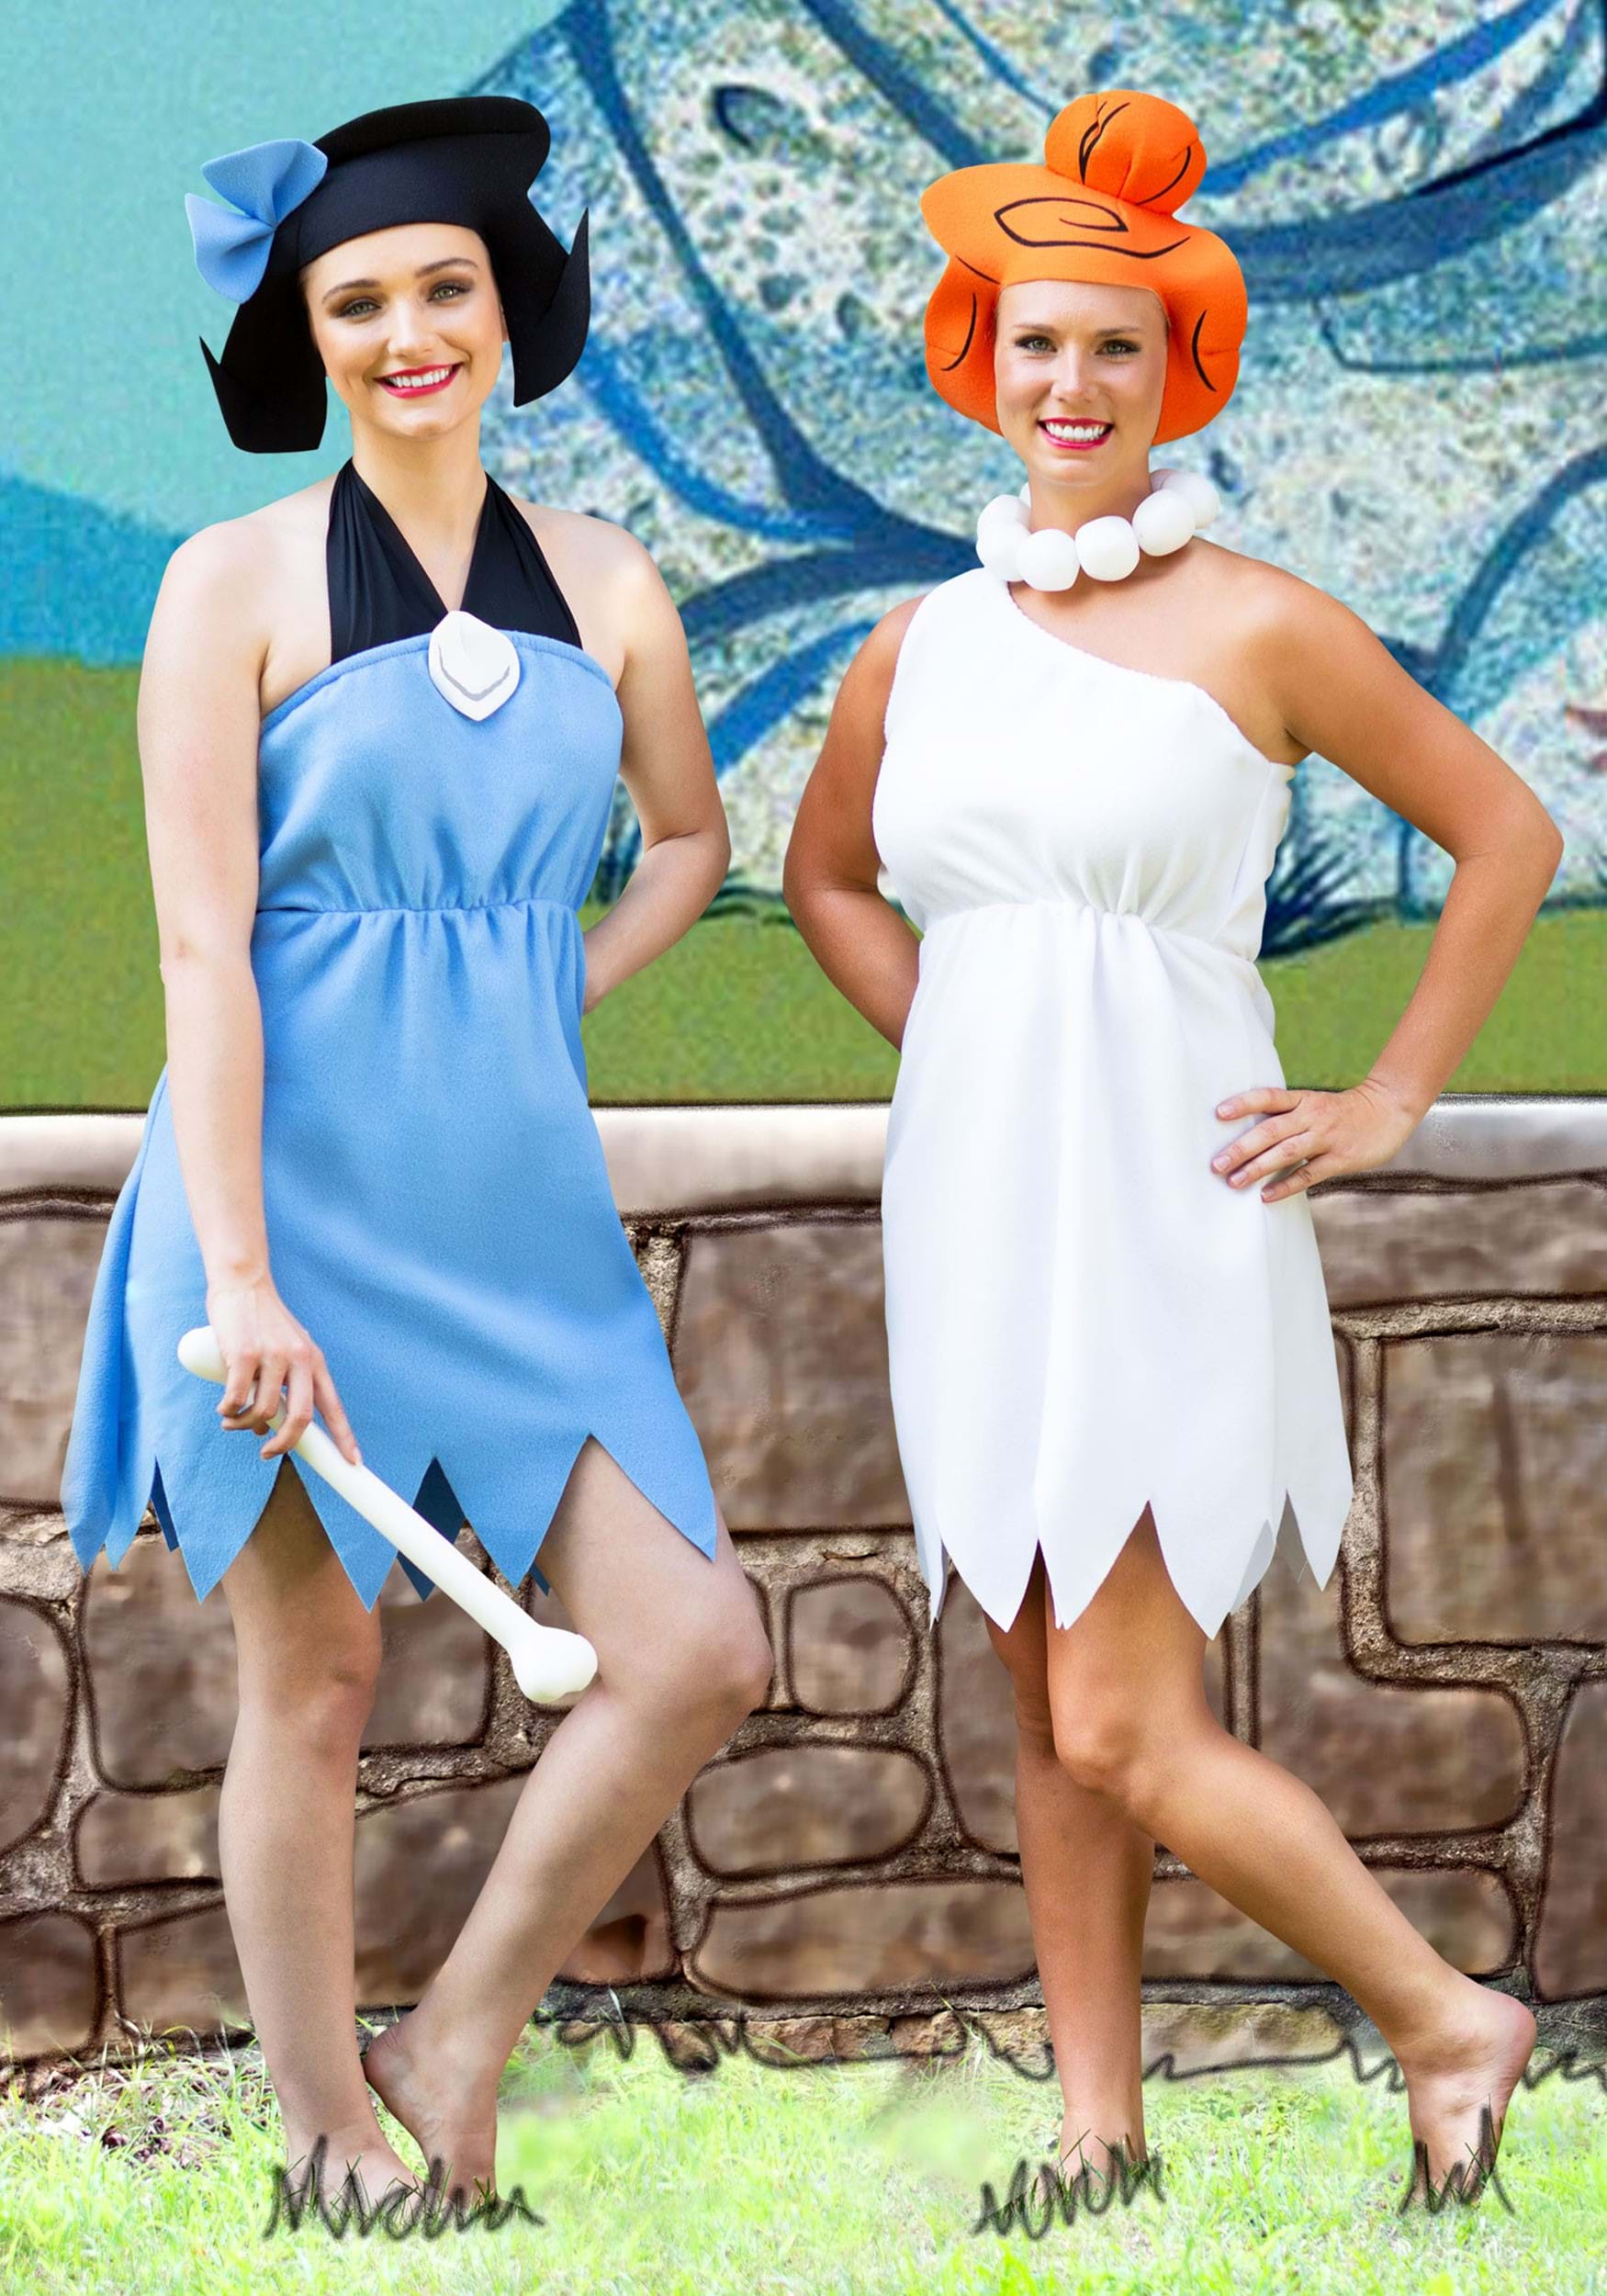 Women's Plus Size Wilma Flintstone Costume , Cartoon Character Costumes